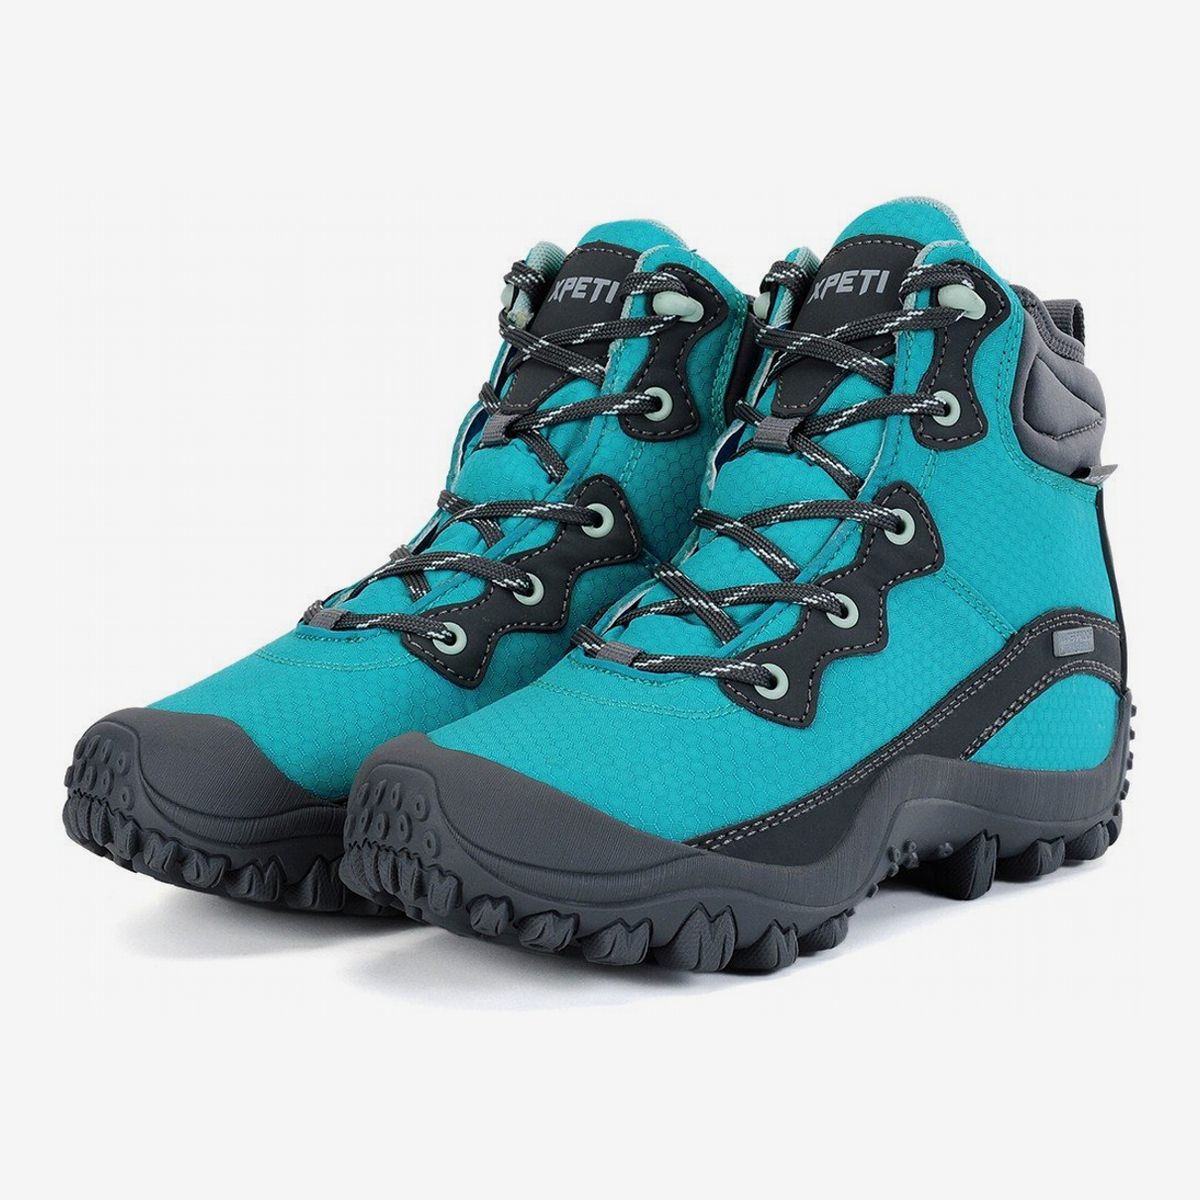 waterproof trekking shoes for women